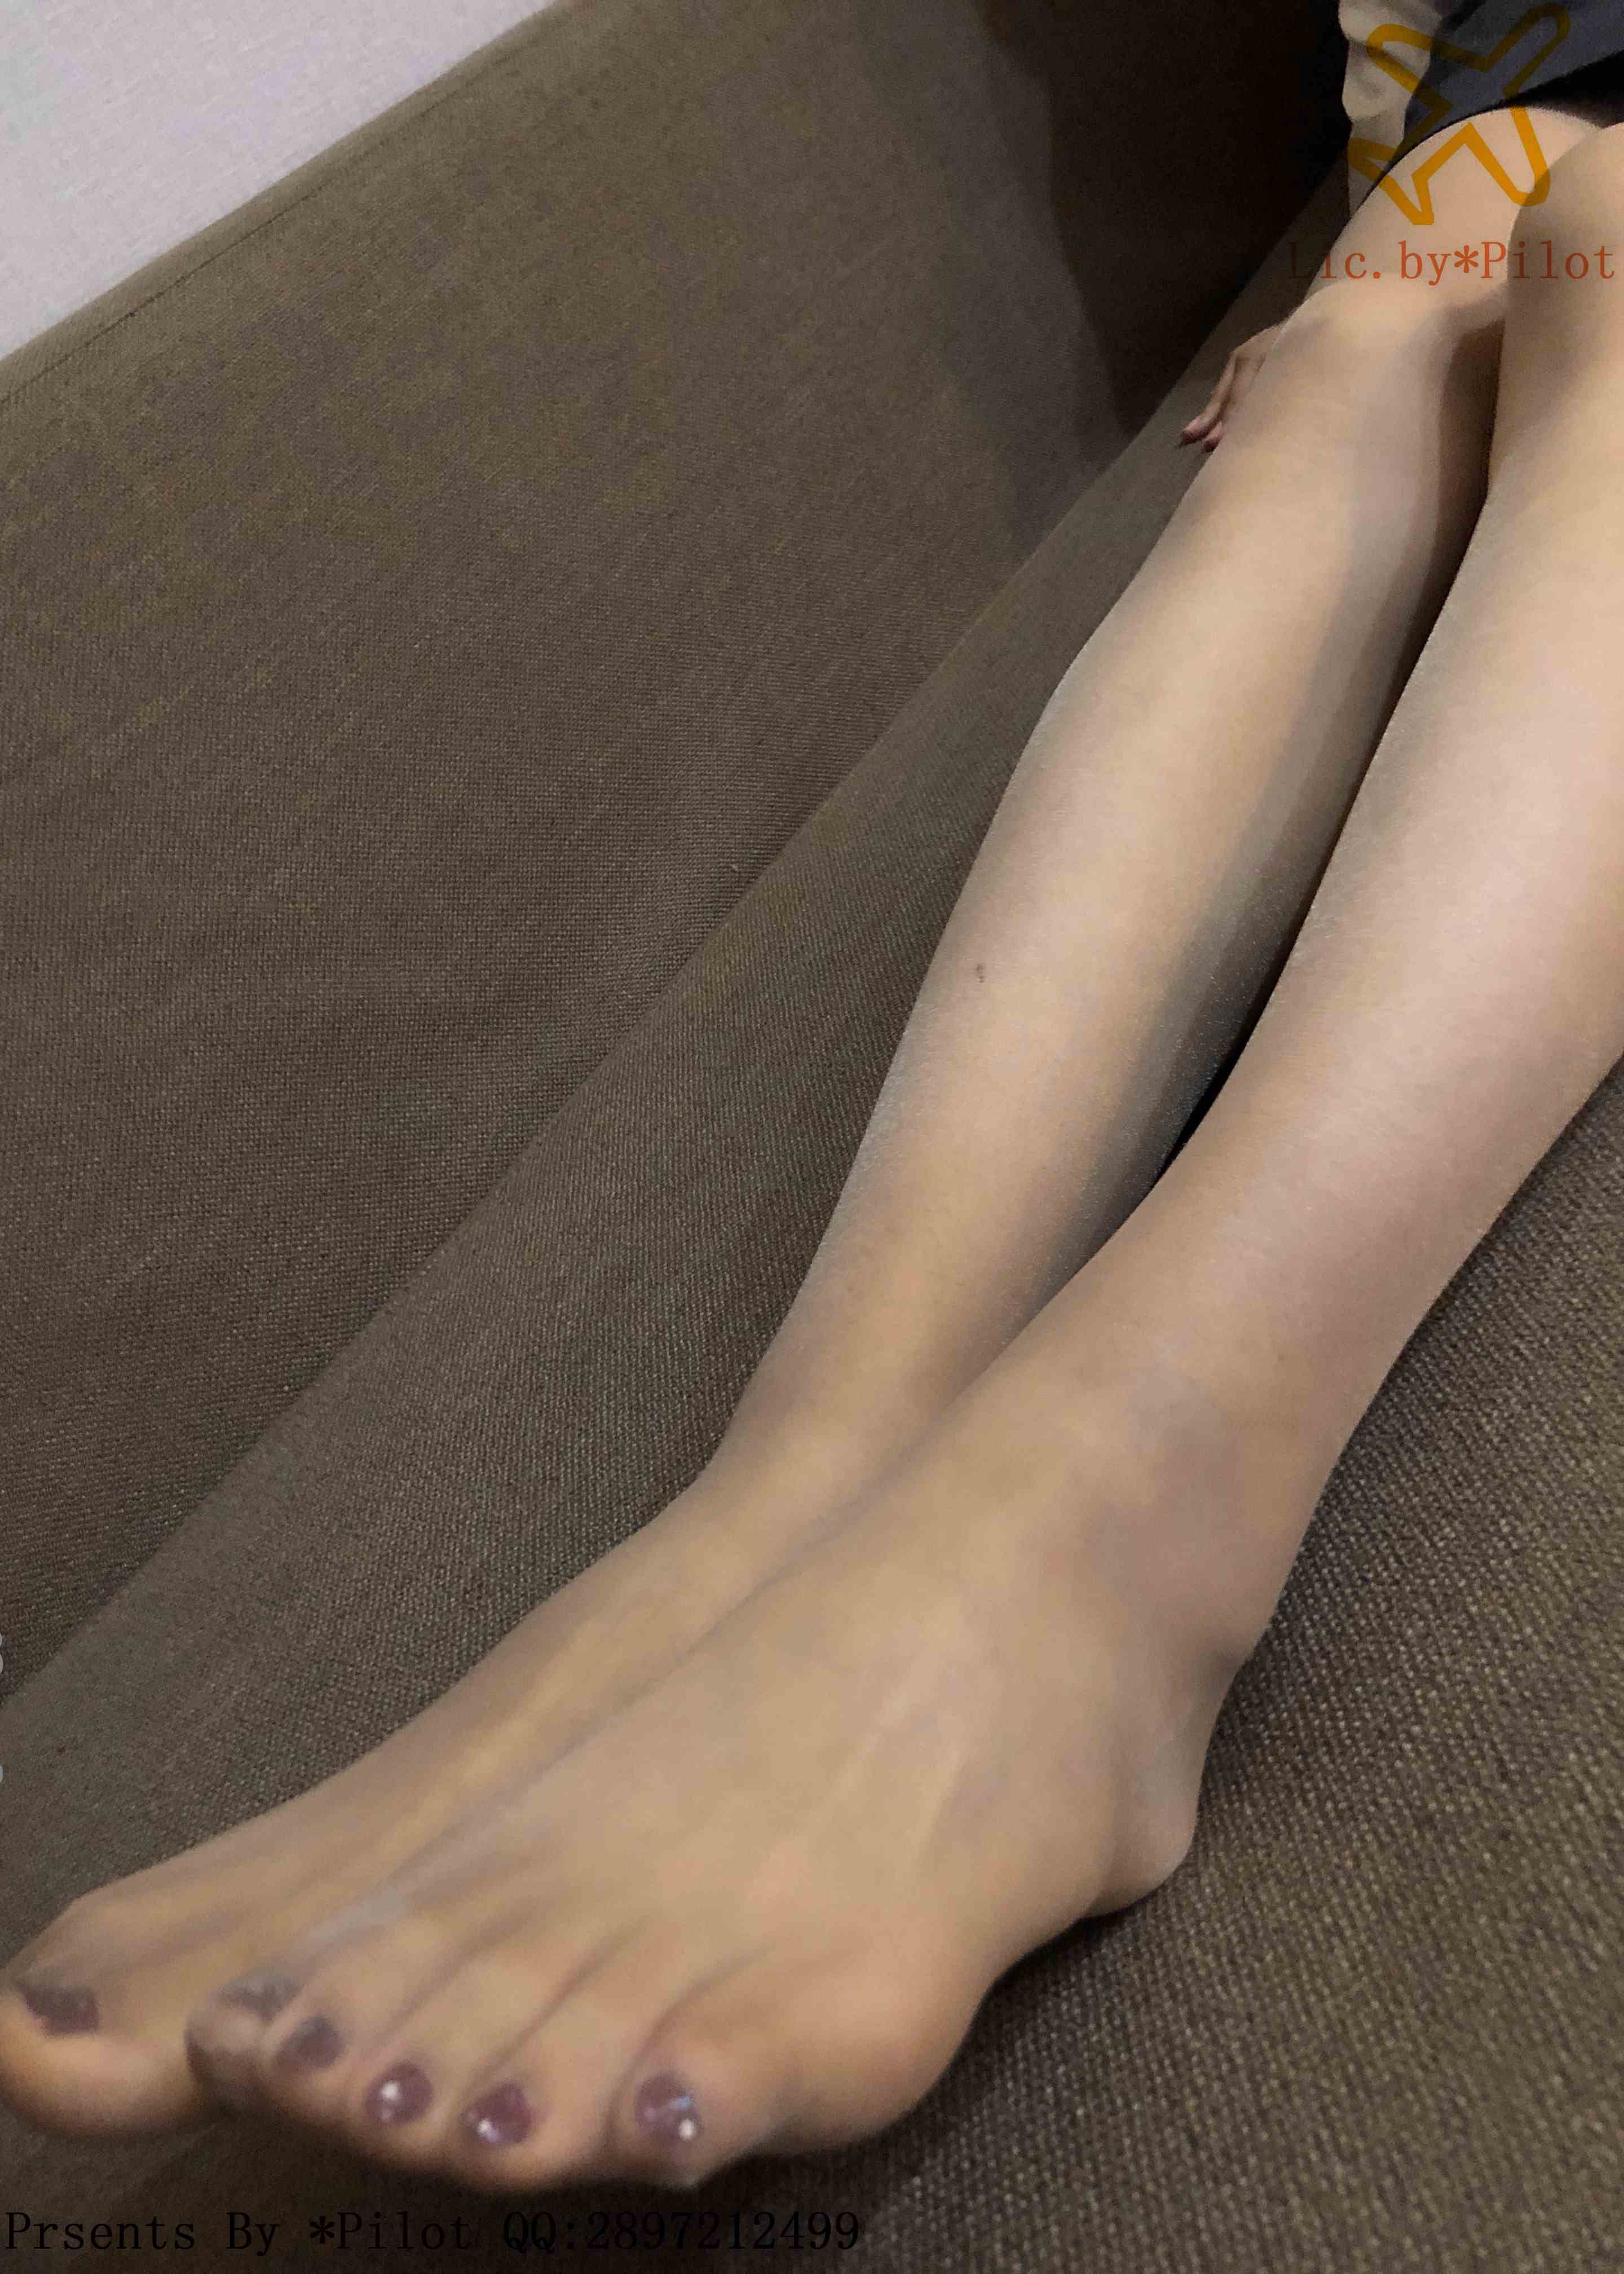 China Beauty Legs and feet 660